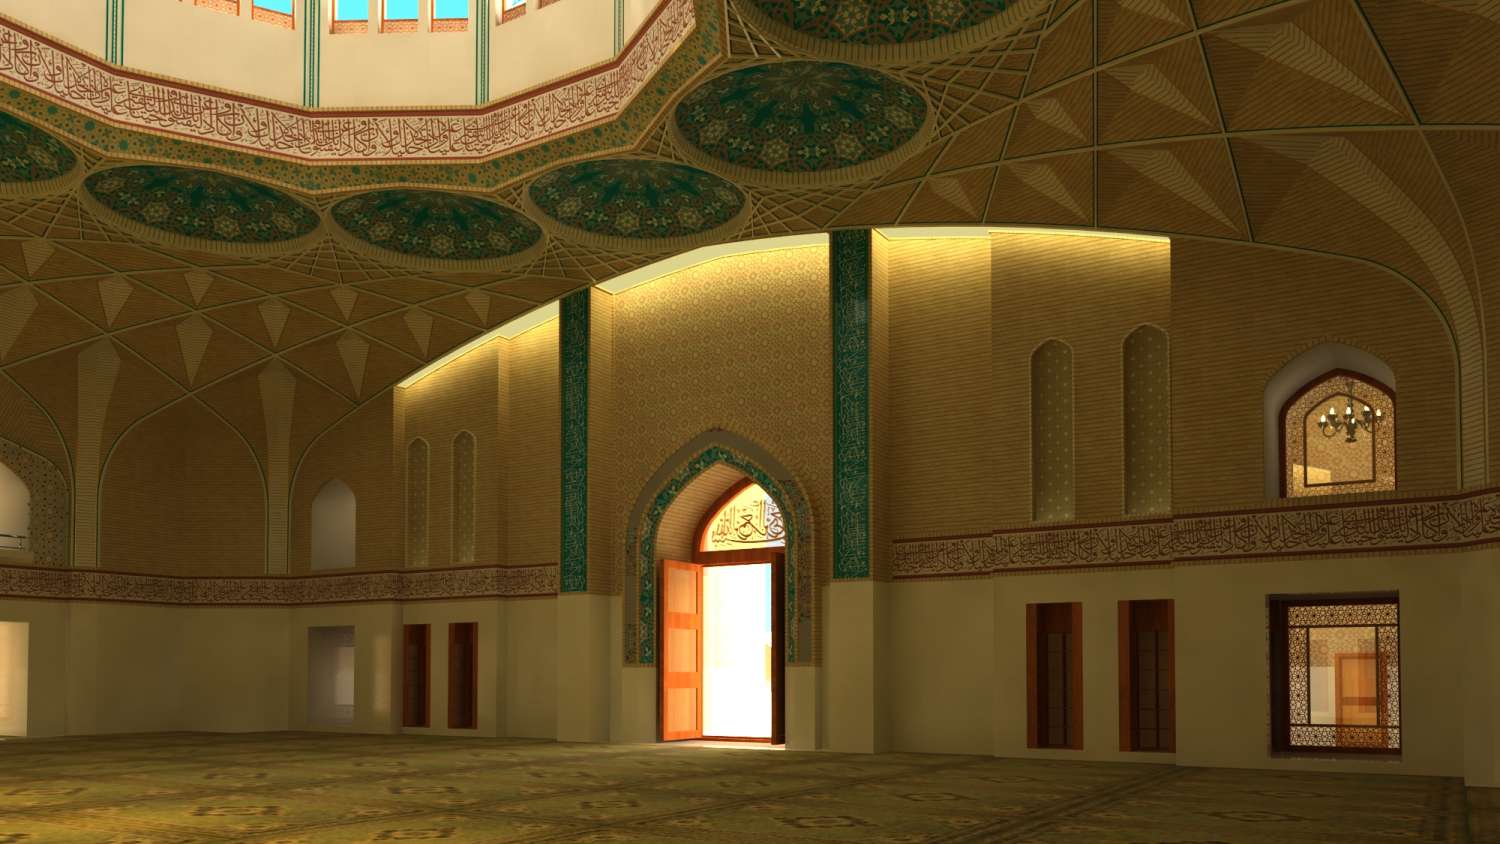 Design of new mosque: rendering of prayer hall interior, facing portal.